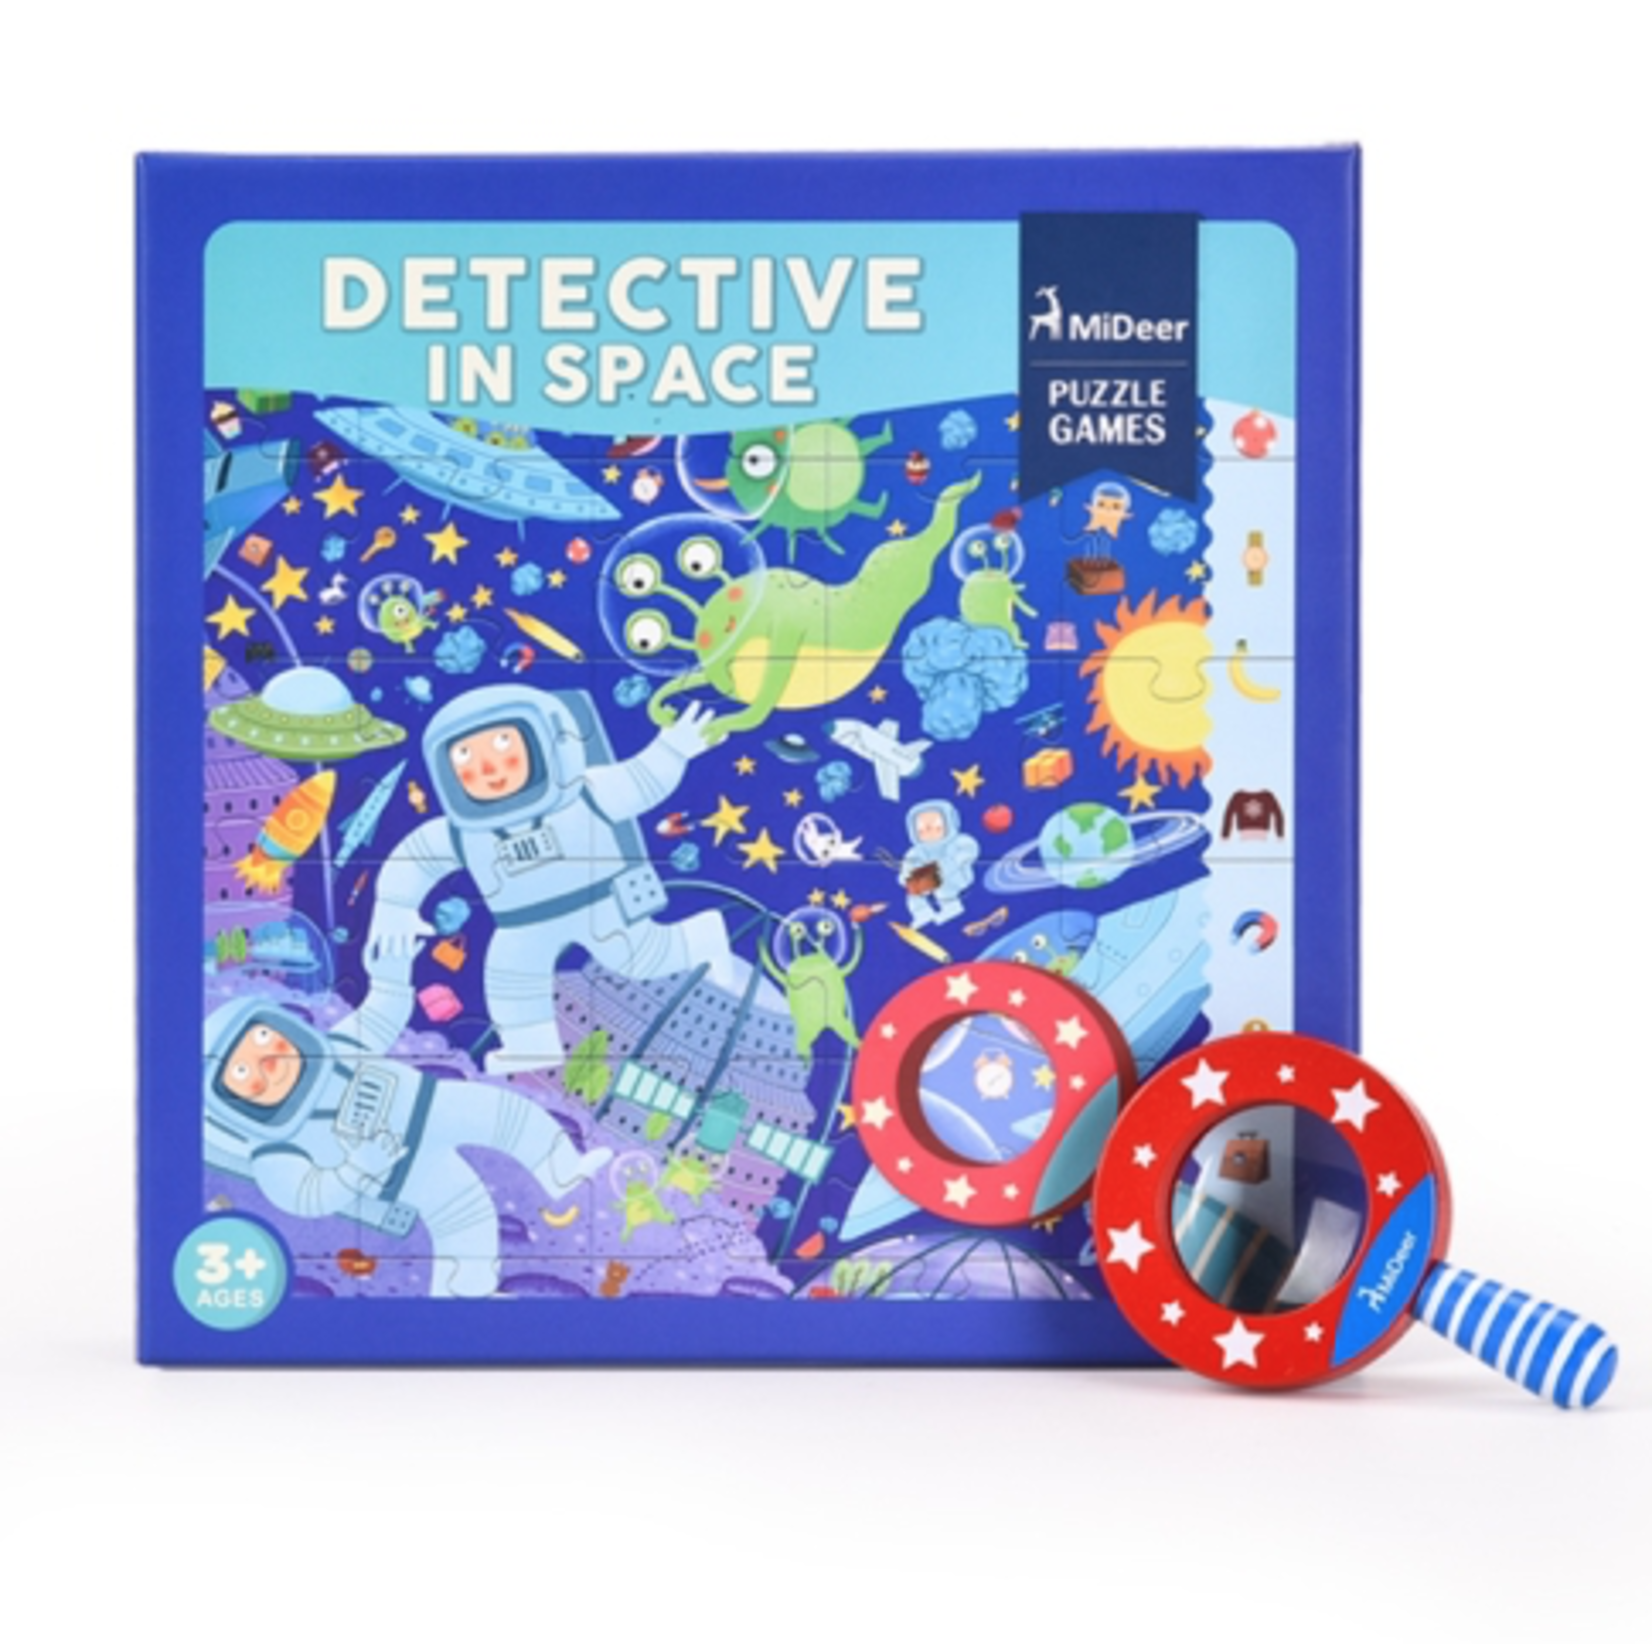 Mideer Mideer - 42 Piece Kid's Jigsaw Puzzle - Astronaut Detectives in Space